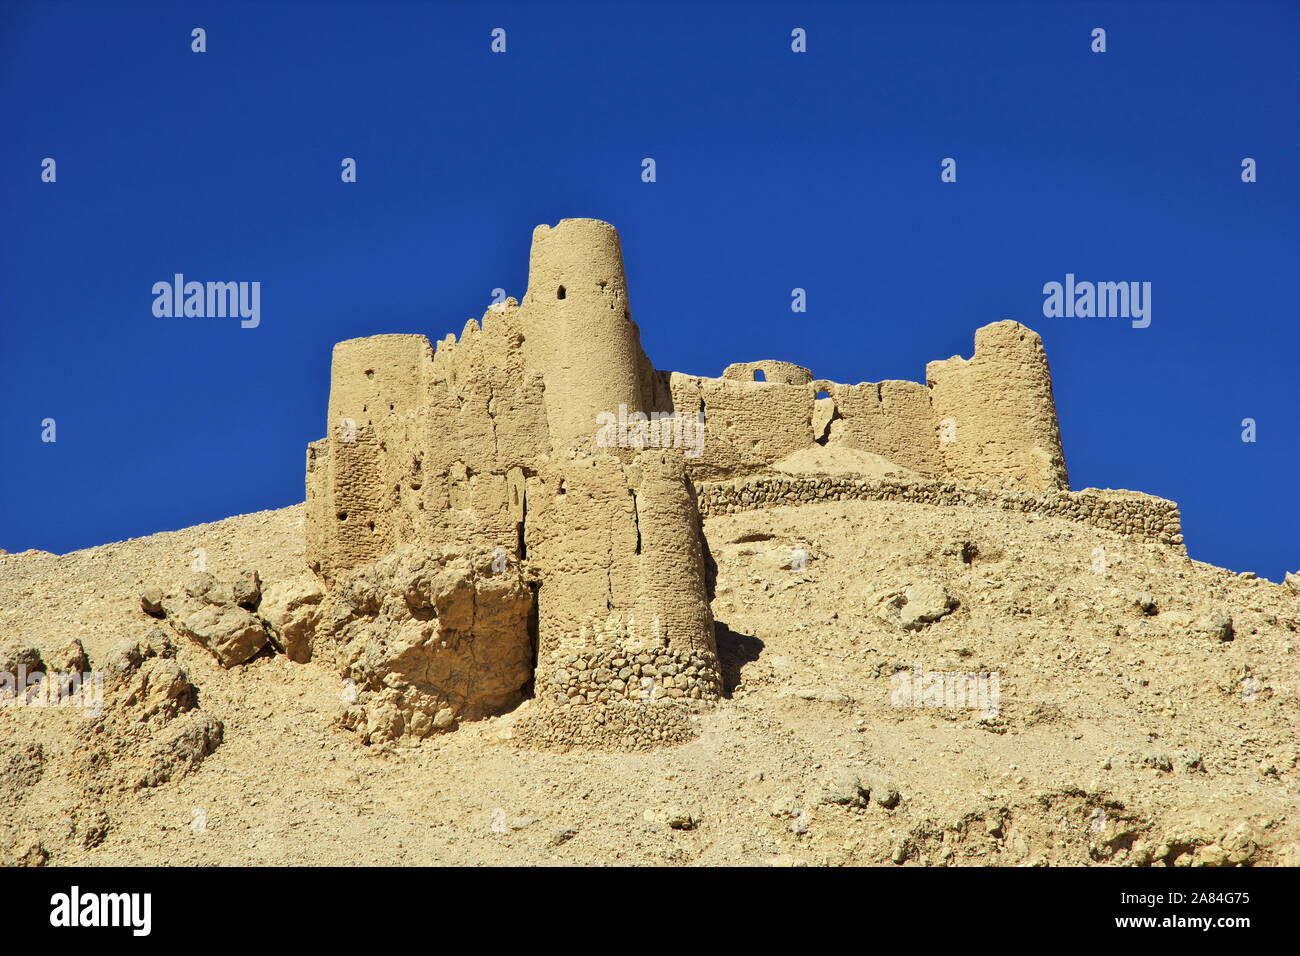 The fortress in mountains in Wadi Hadhramaut, Yemen Stock Photo